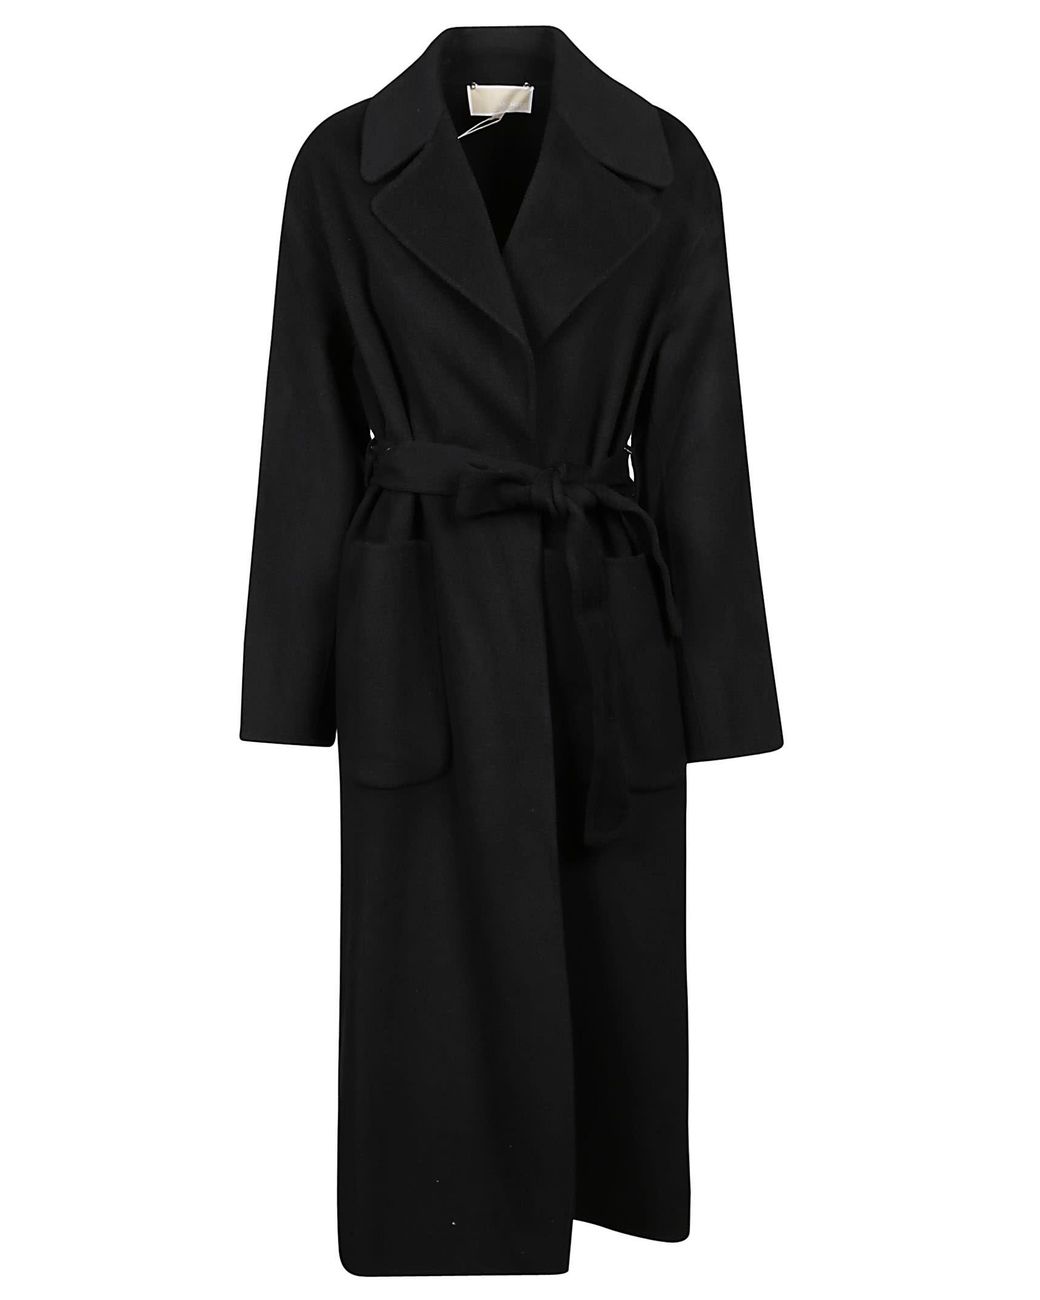 Michael Kors Double Face Robe Coat in Black | Lyst